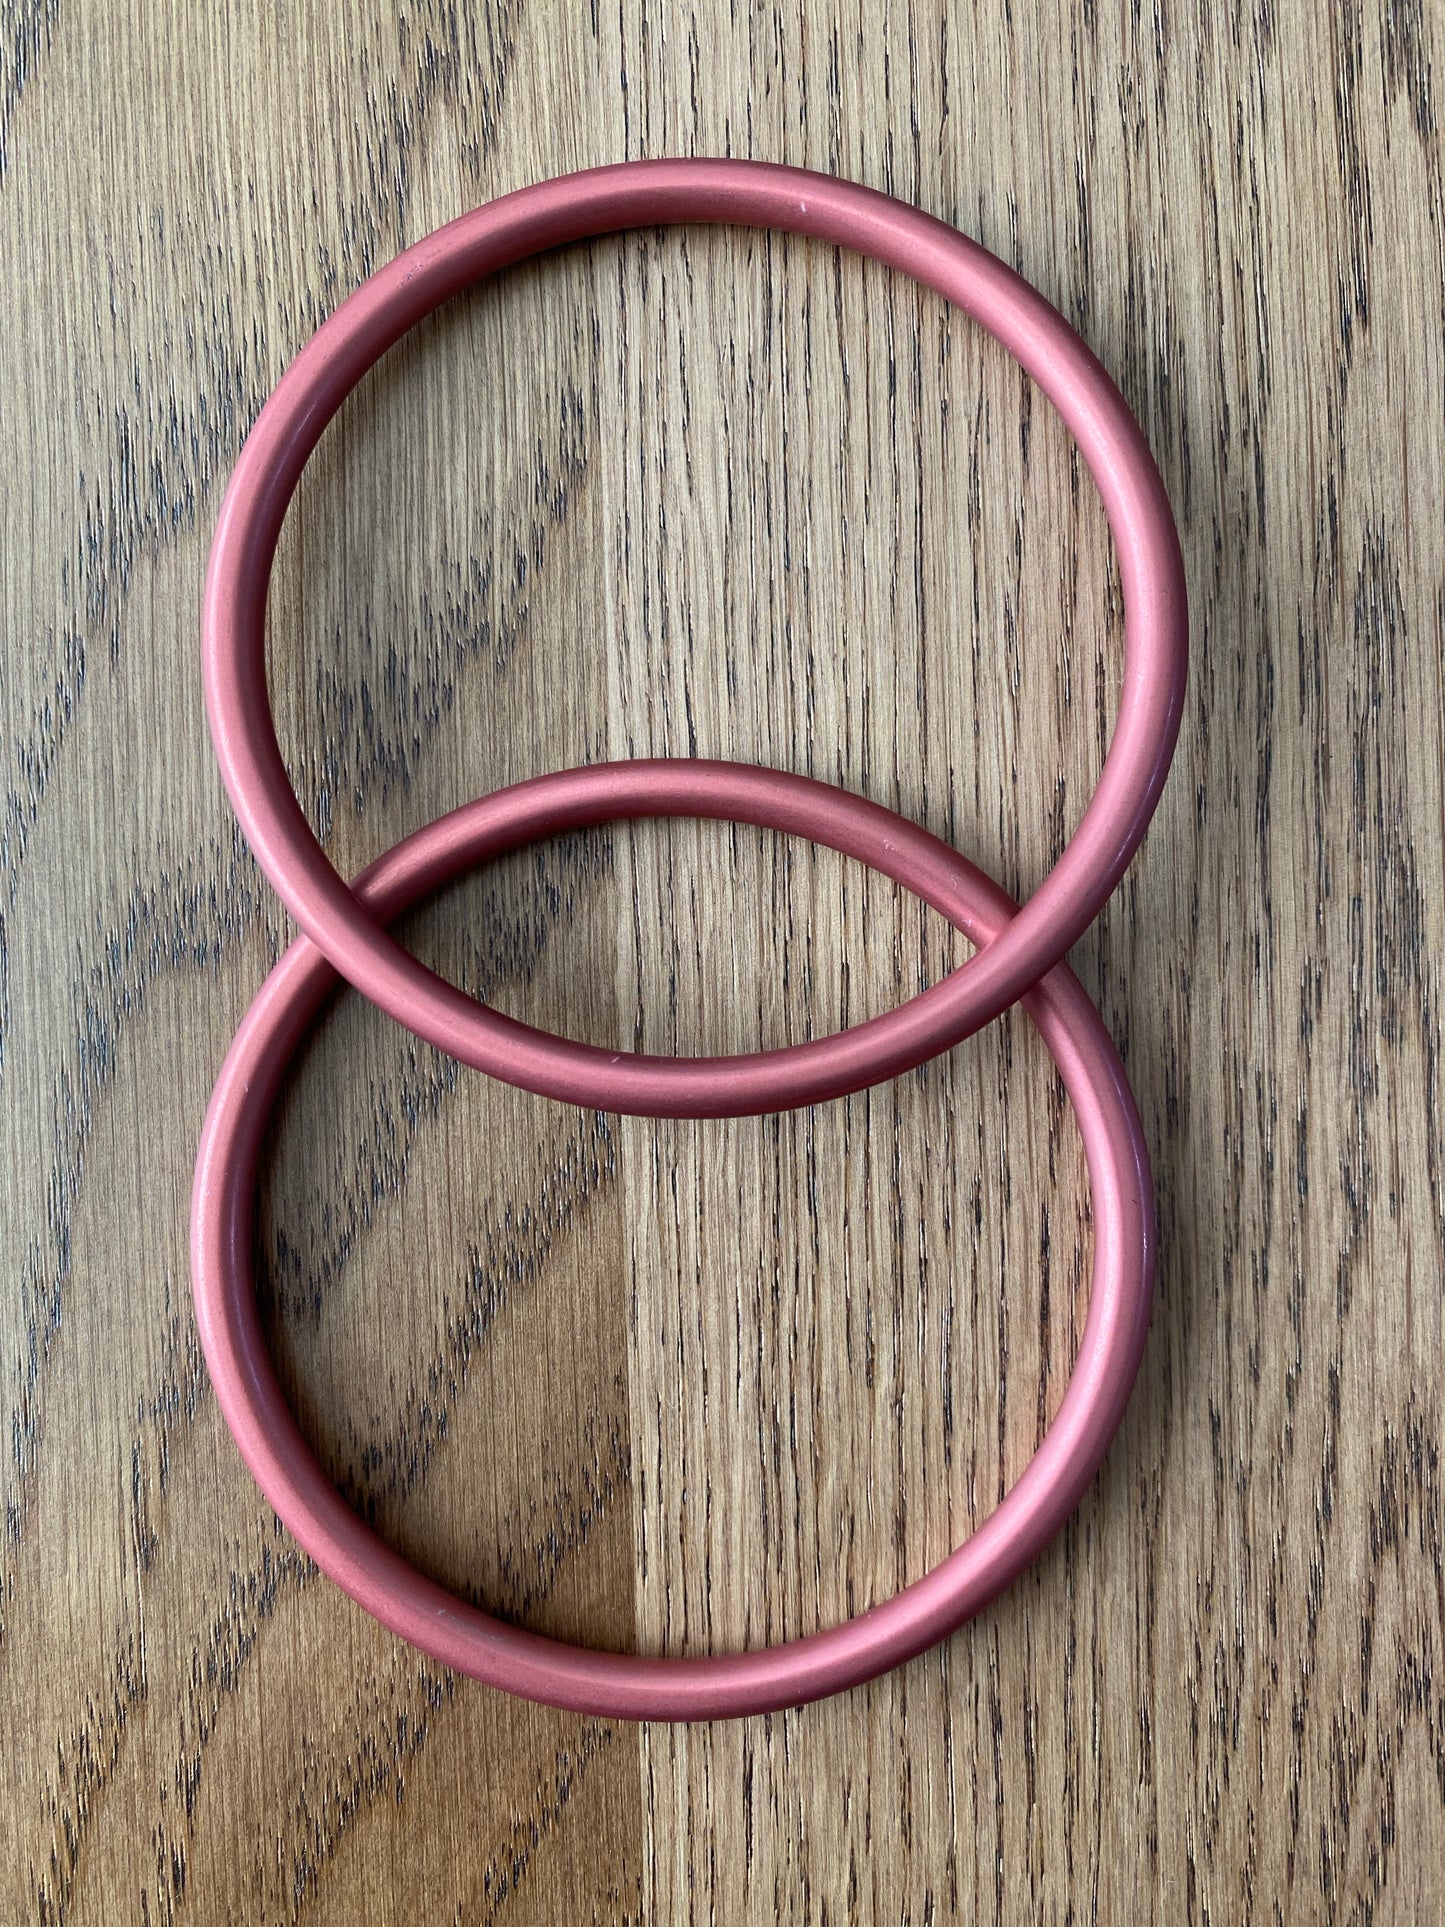 Large Aluminum Sling Ring- Pink - Rebozo Shop Lola My Love